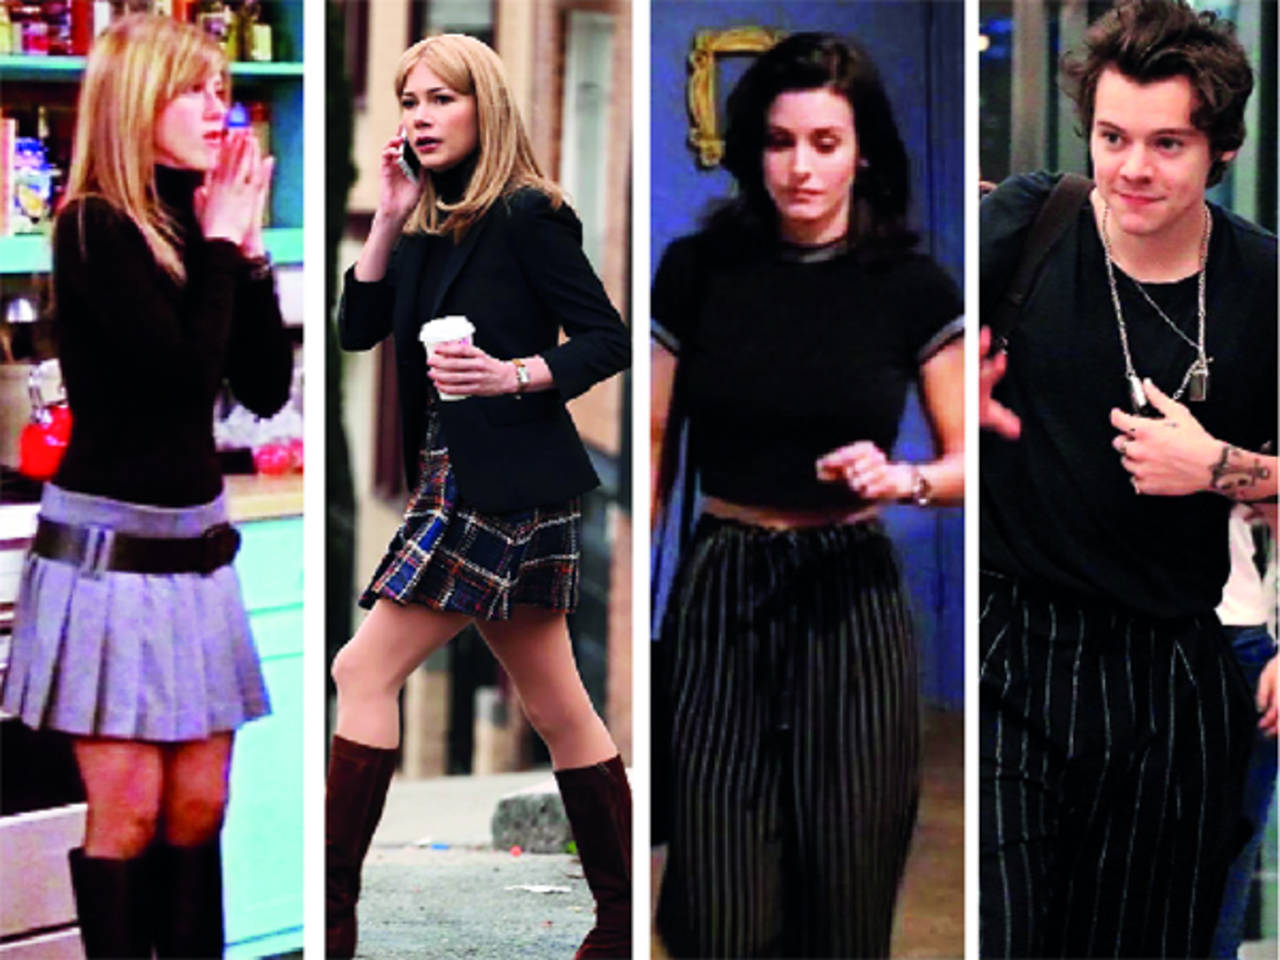 Rachel Green From Friends  Movie inspired outfits, 90's outfits, Character  inspired outfits